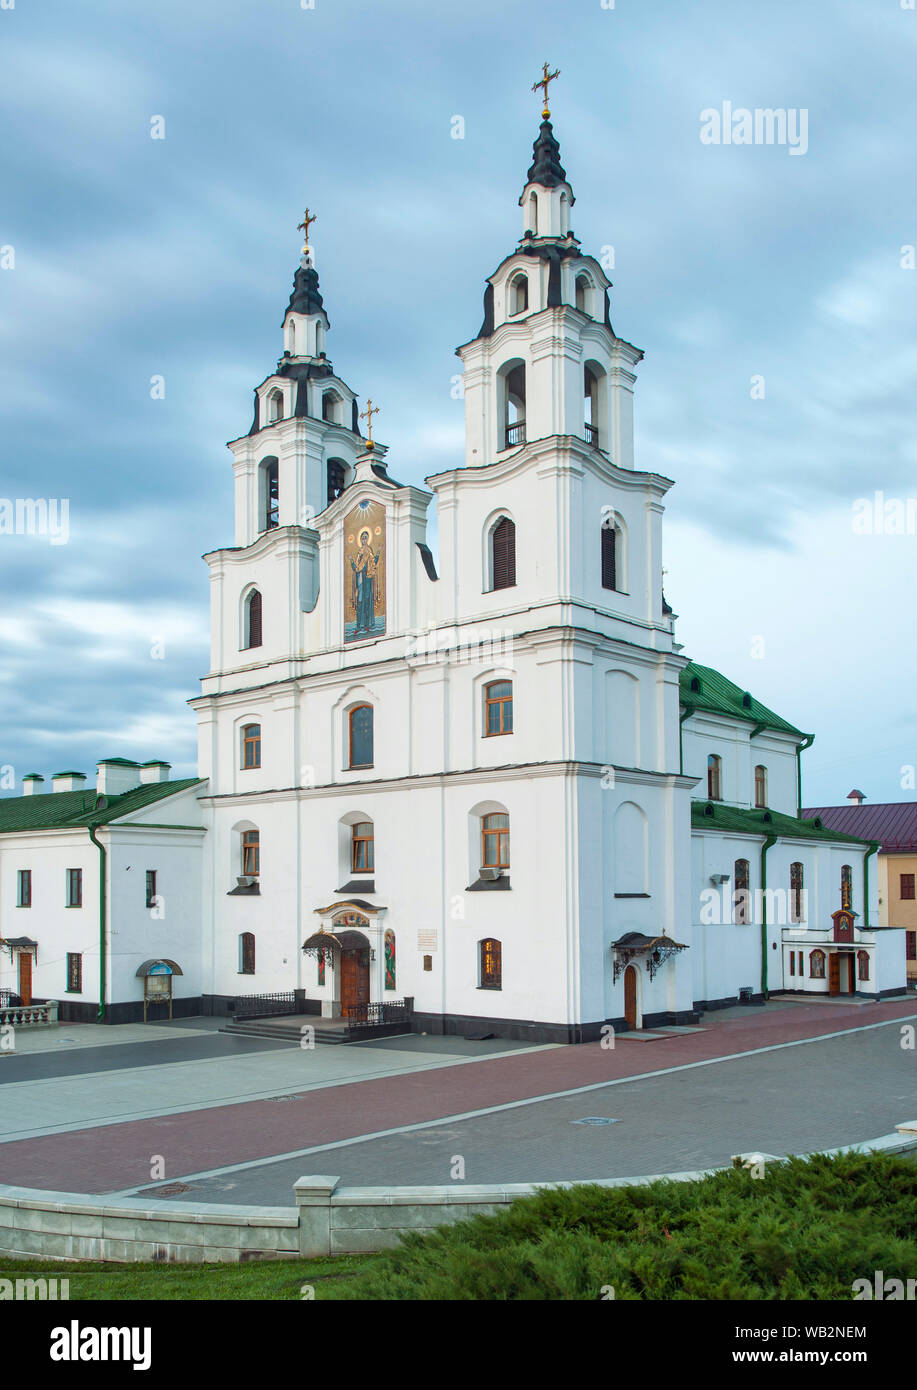 Der Heilige Geist Kathedrale in Minsk, Belarus. Stockfoto